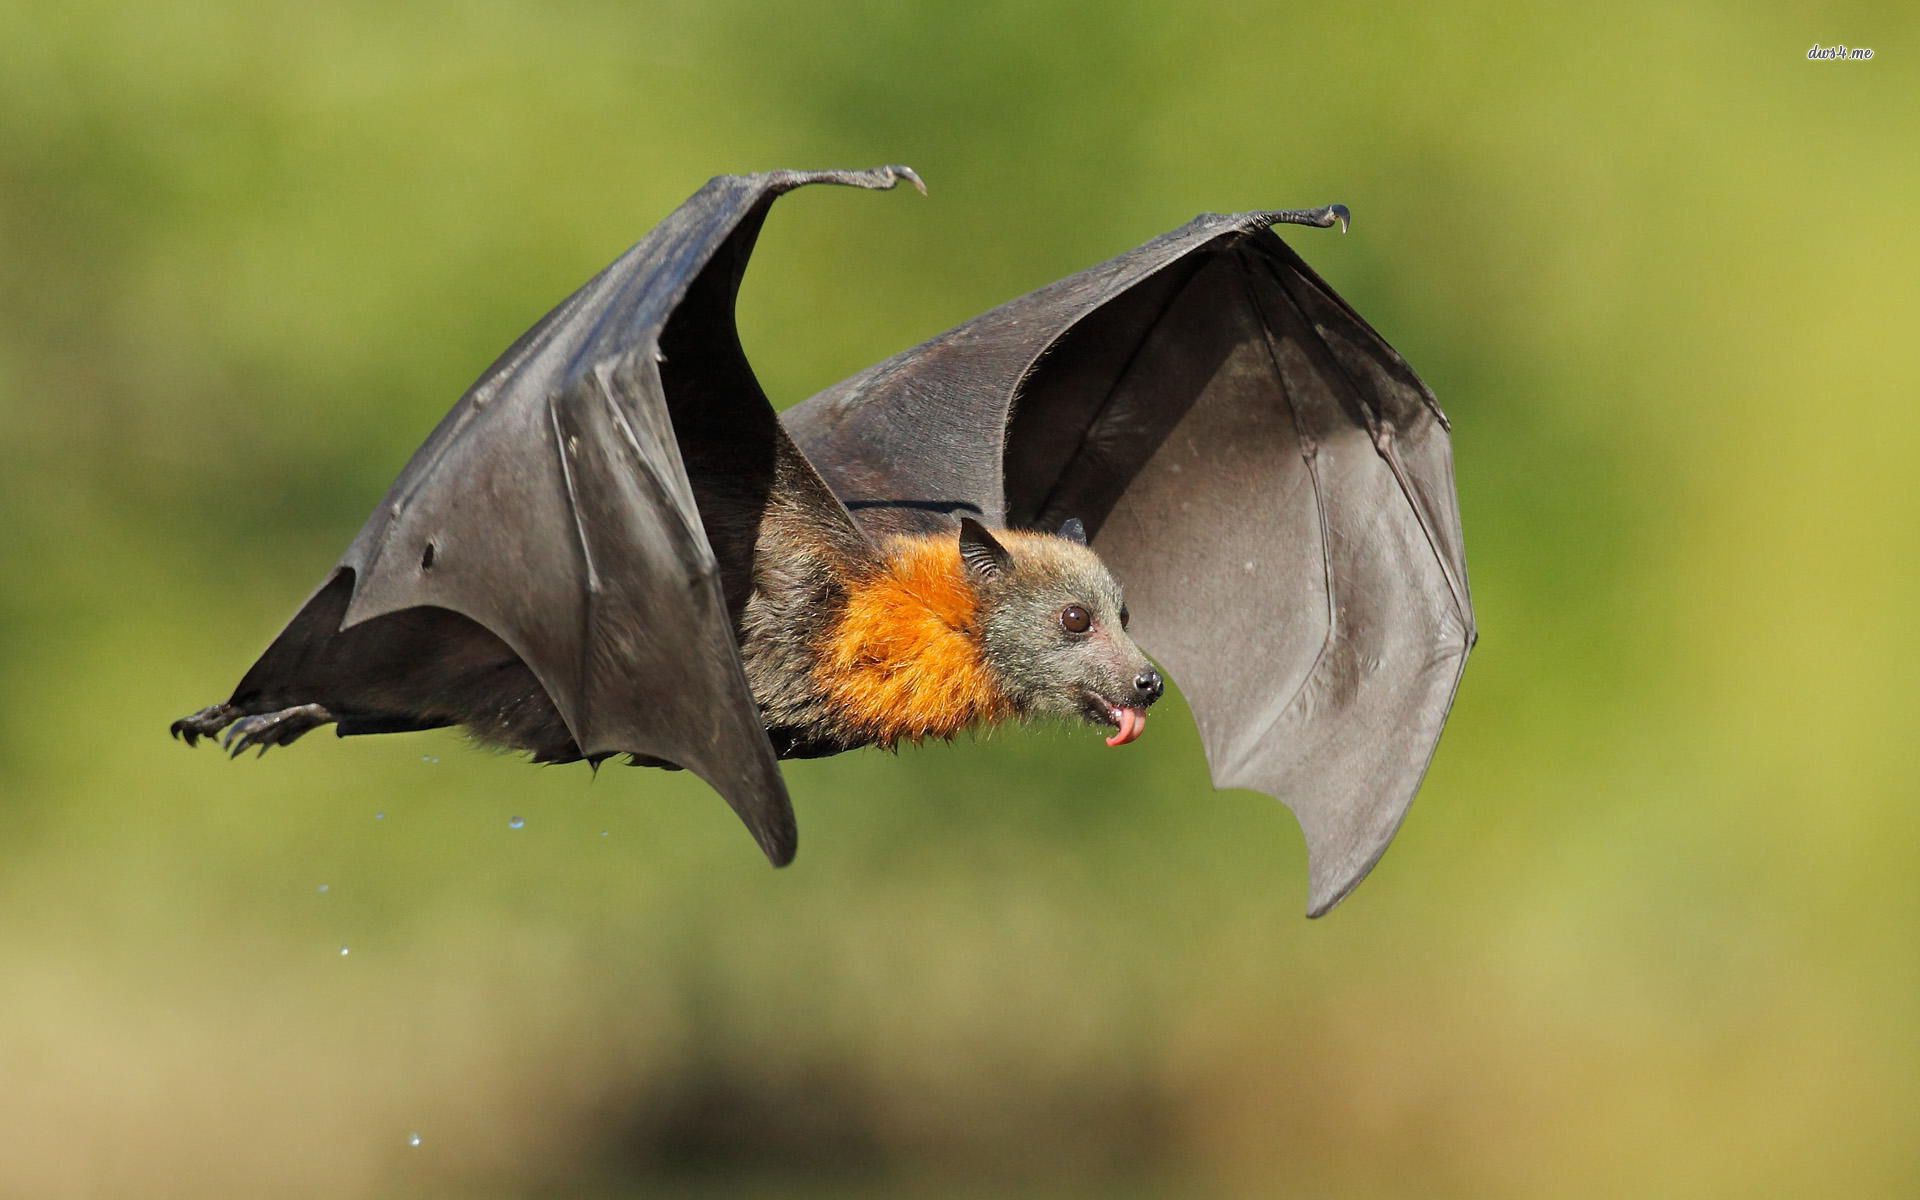 Cute bat HD wallpaper. Cute bat, Amazing animal picture, Bat flying